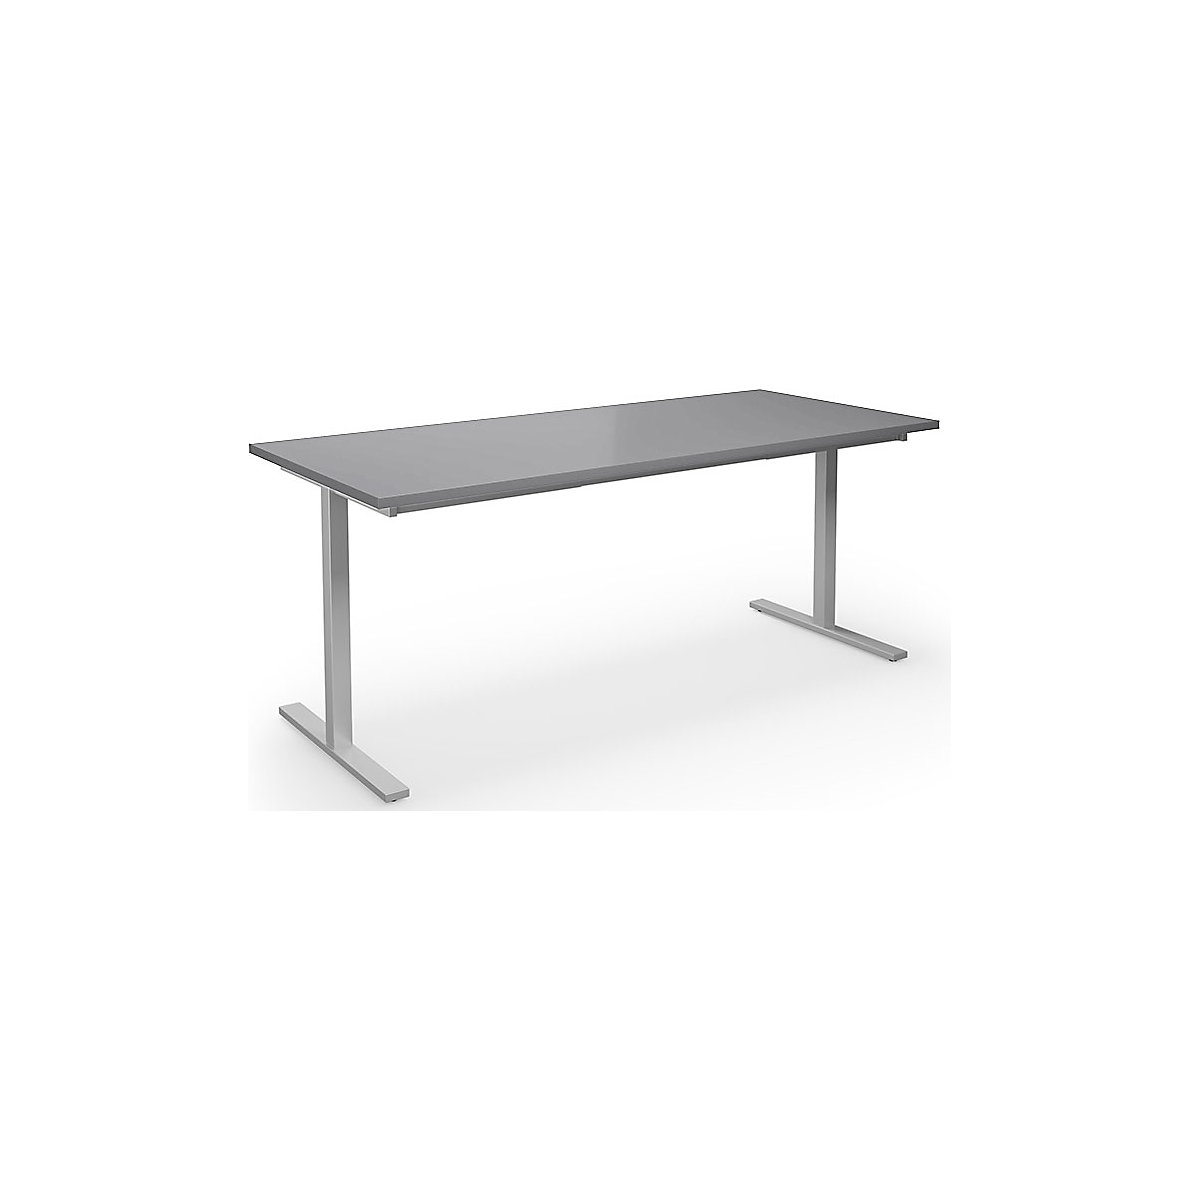 DUO-T multi-purpose desk, straight tabletop, WxD 1800 x 800 mm, light grey, silver-15